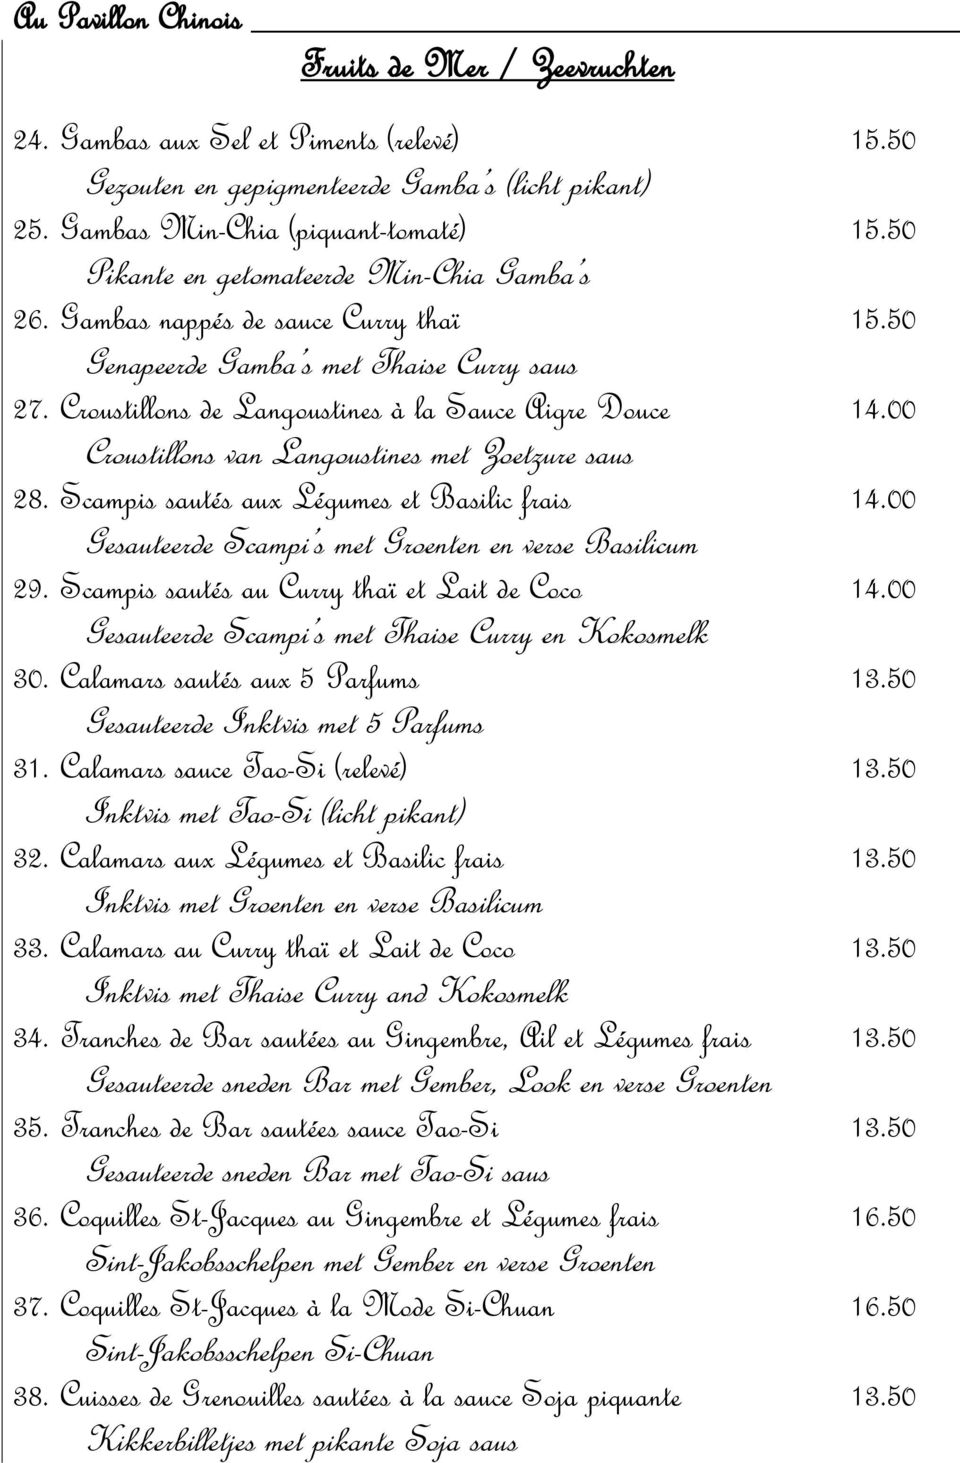 00 Croustillons van Langoustines met Zoetzure saus 28. Scampis sautés aux Légumes et Basilic frais 14.00 Gesauteerde Scampi s met Groenten en verse Basilicum 29.